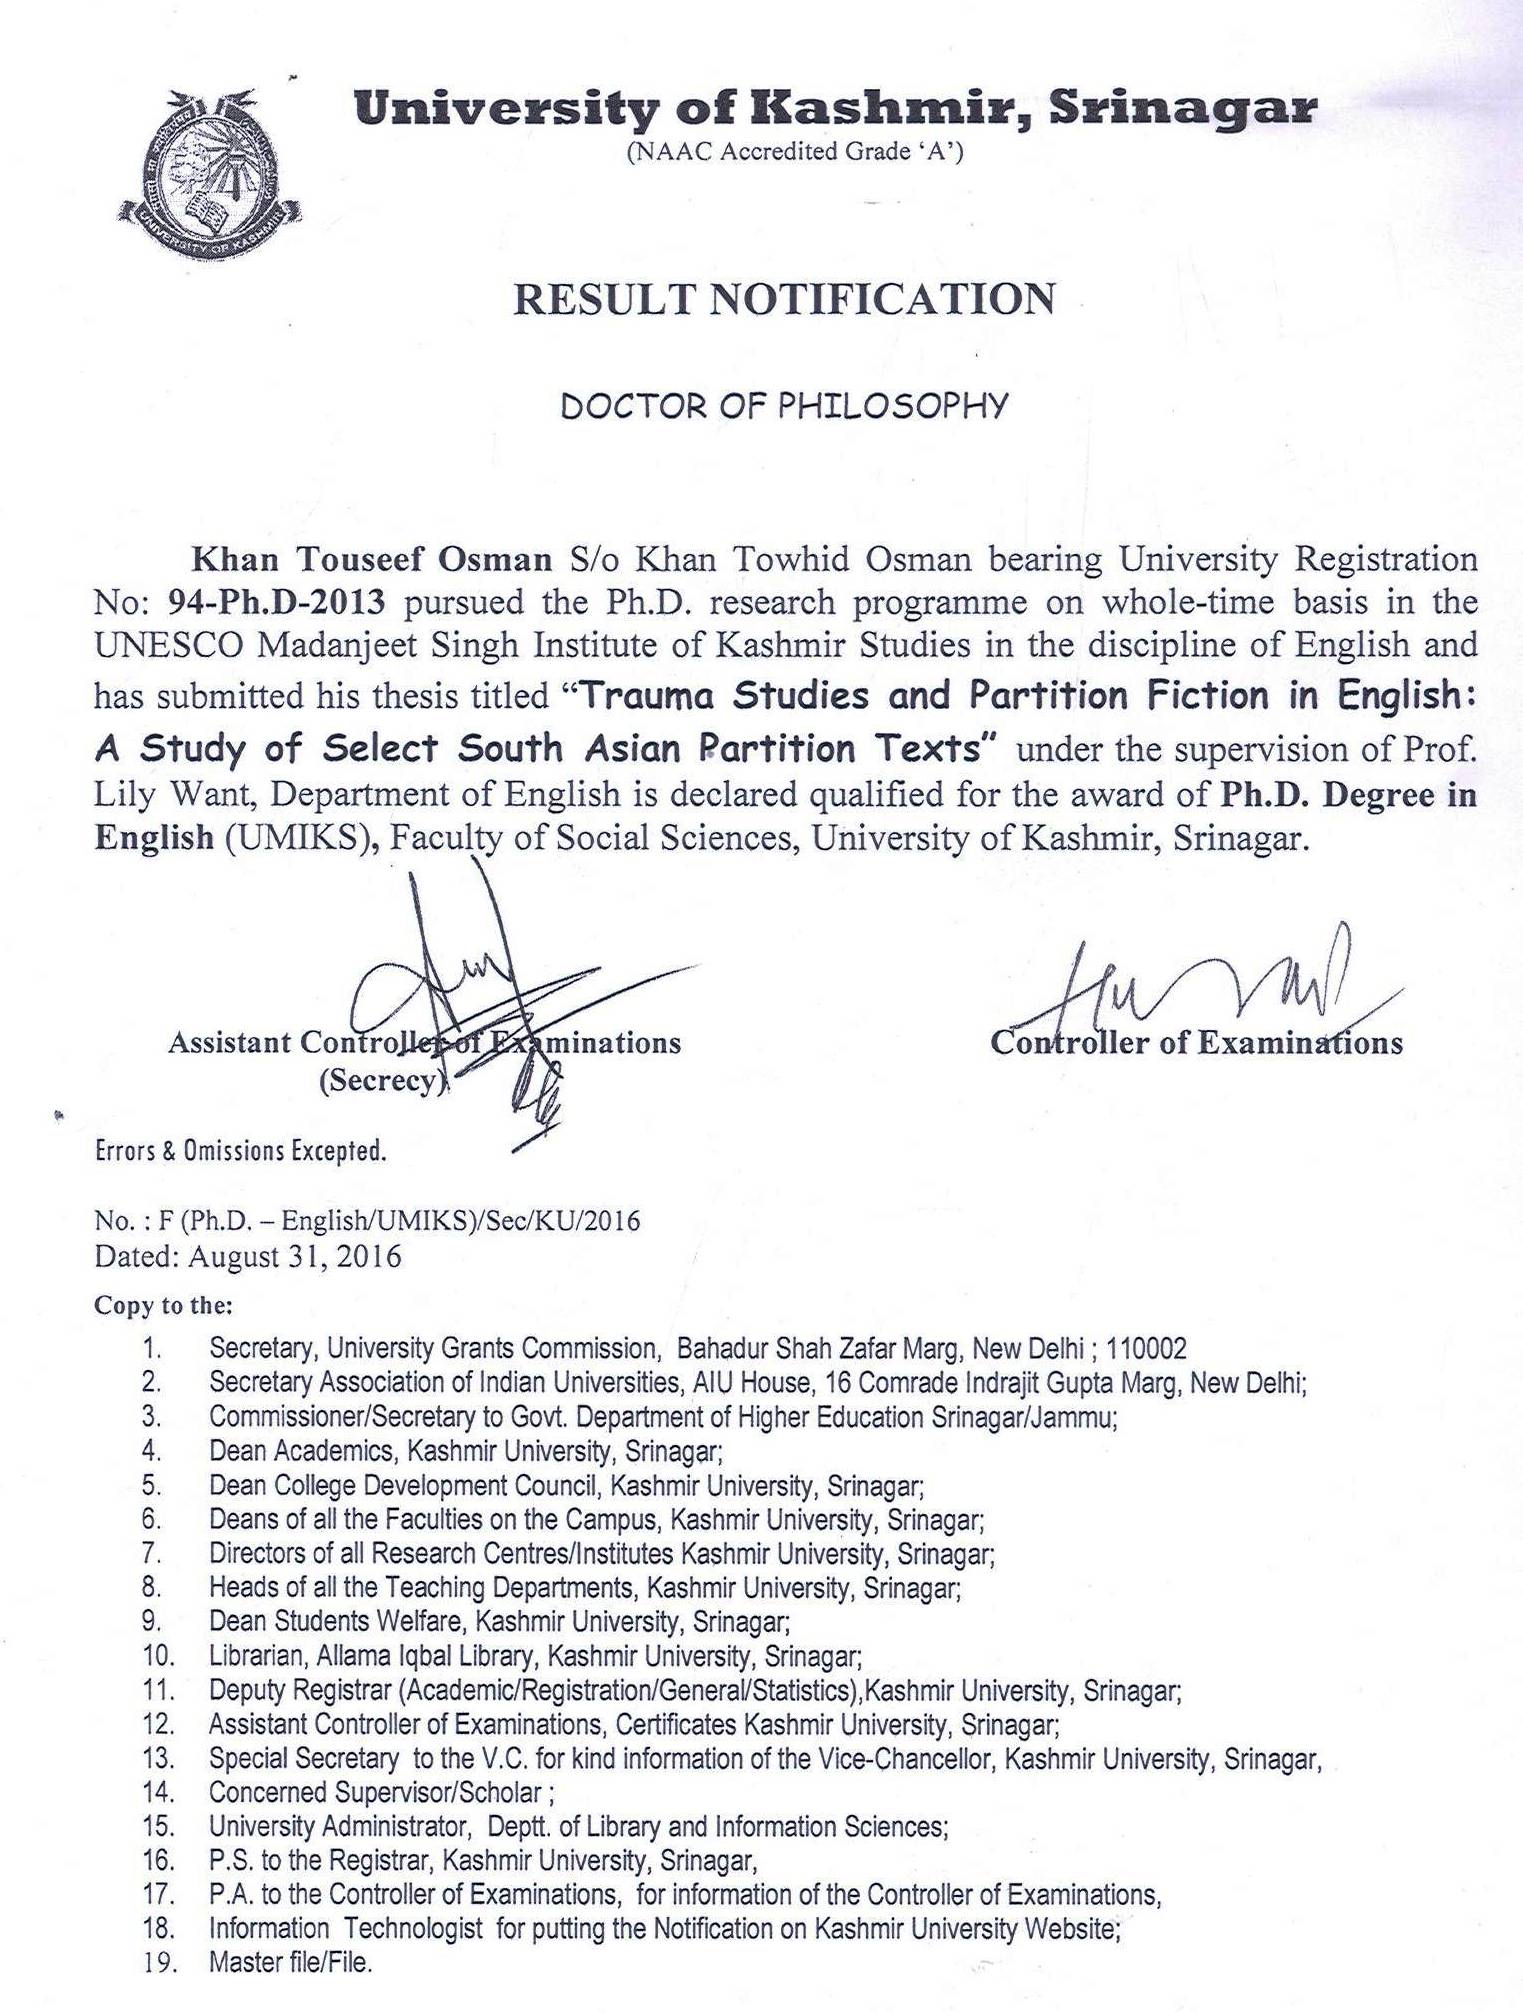 Mr. Khan Touseef Osman Completes PhD from UNESCO Madanjeet Singh Institute of Kashmir Studies